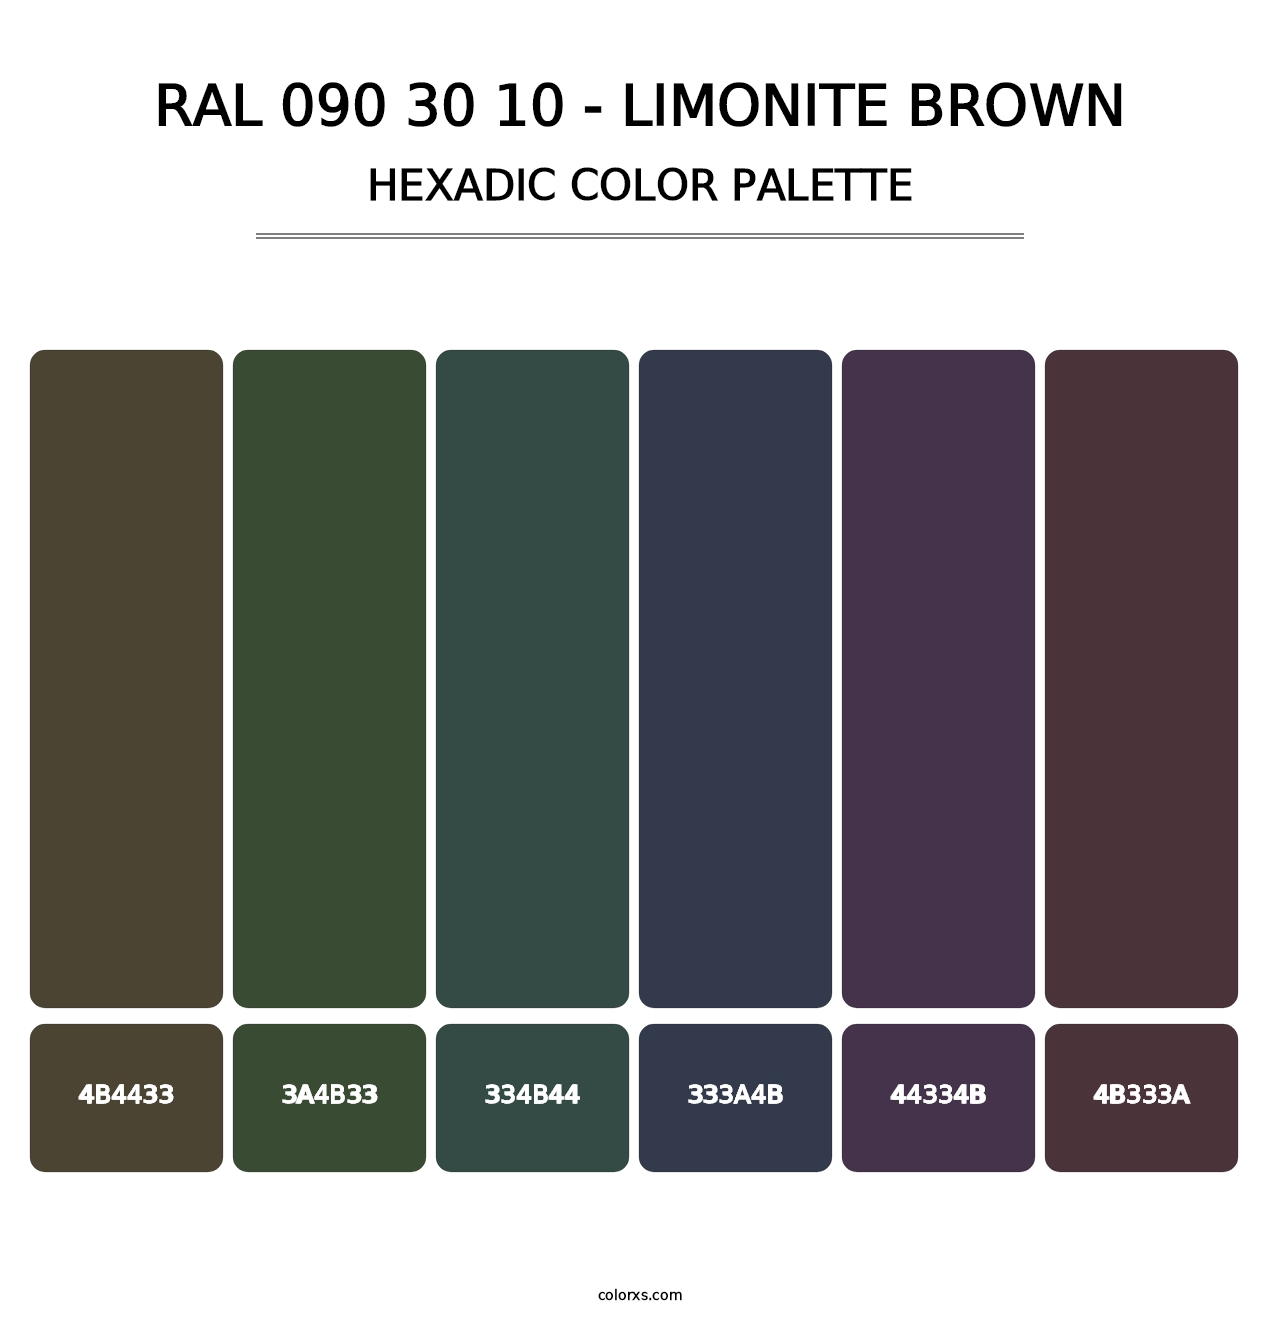 RAL 090 30 10 - Limonite Brown - Hexadic Color Palette